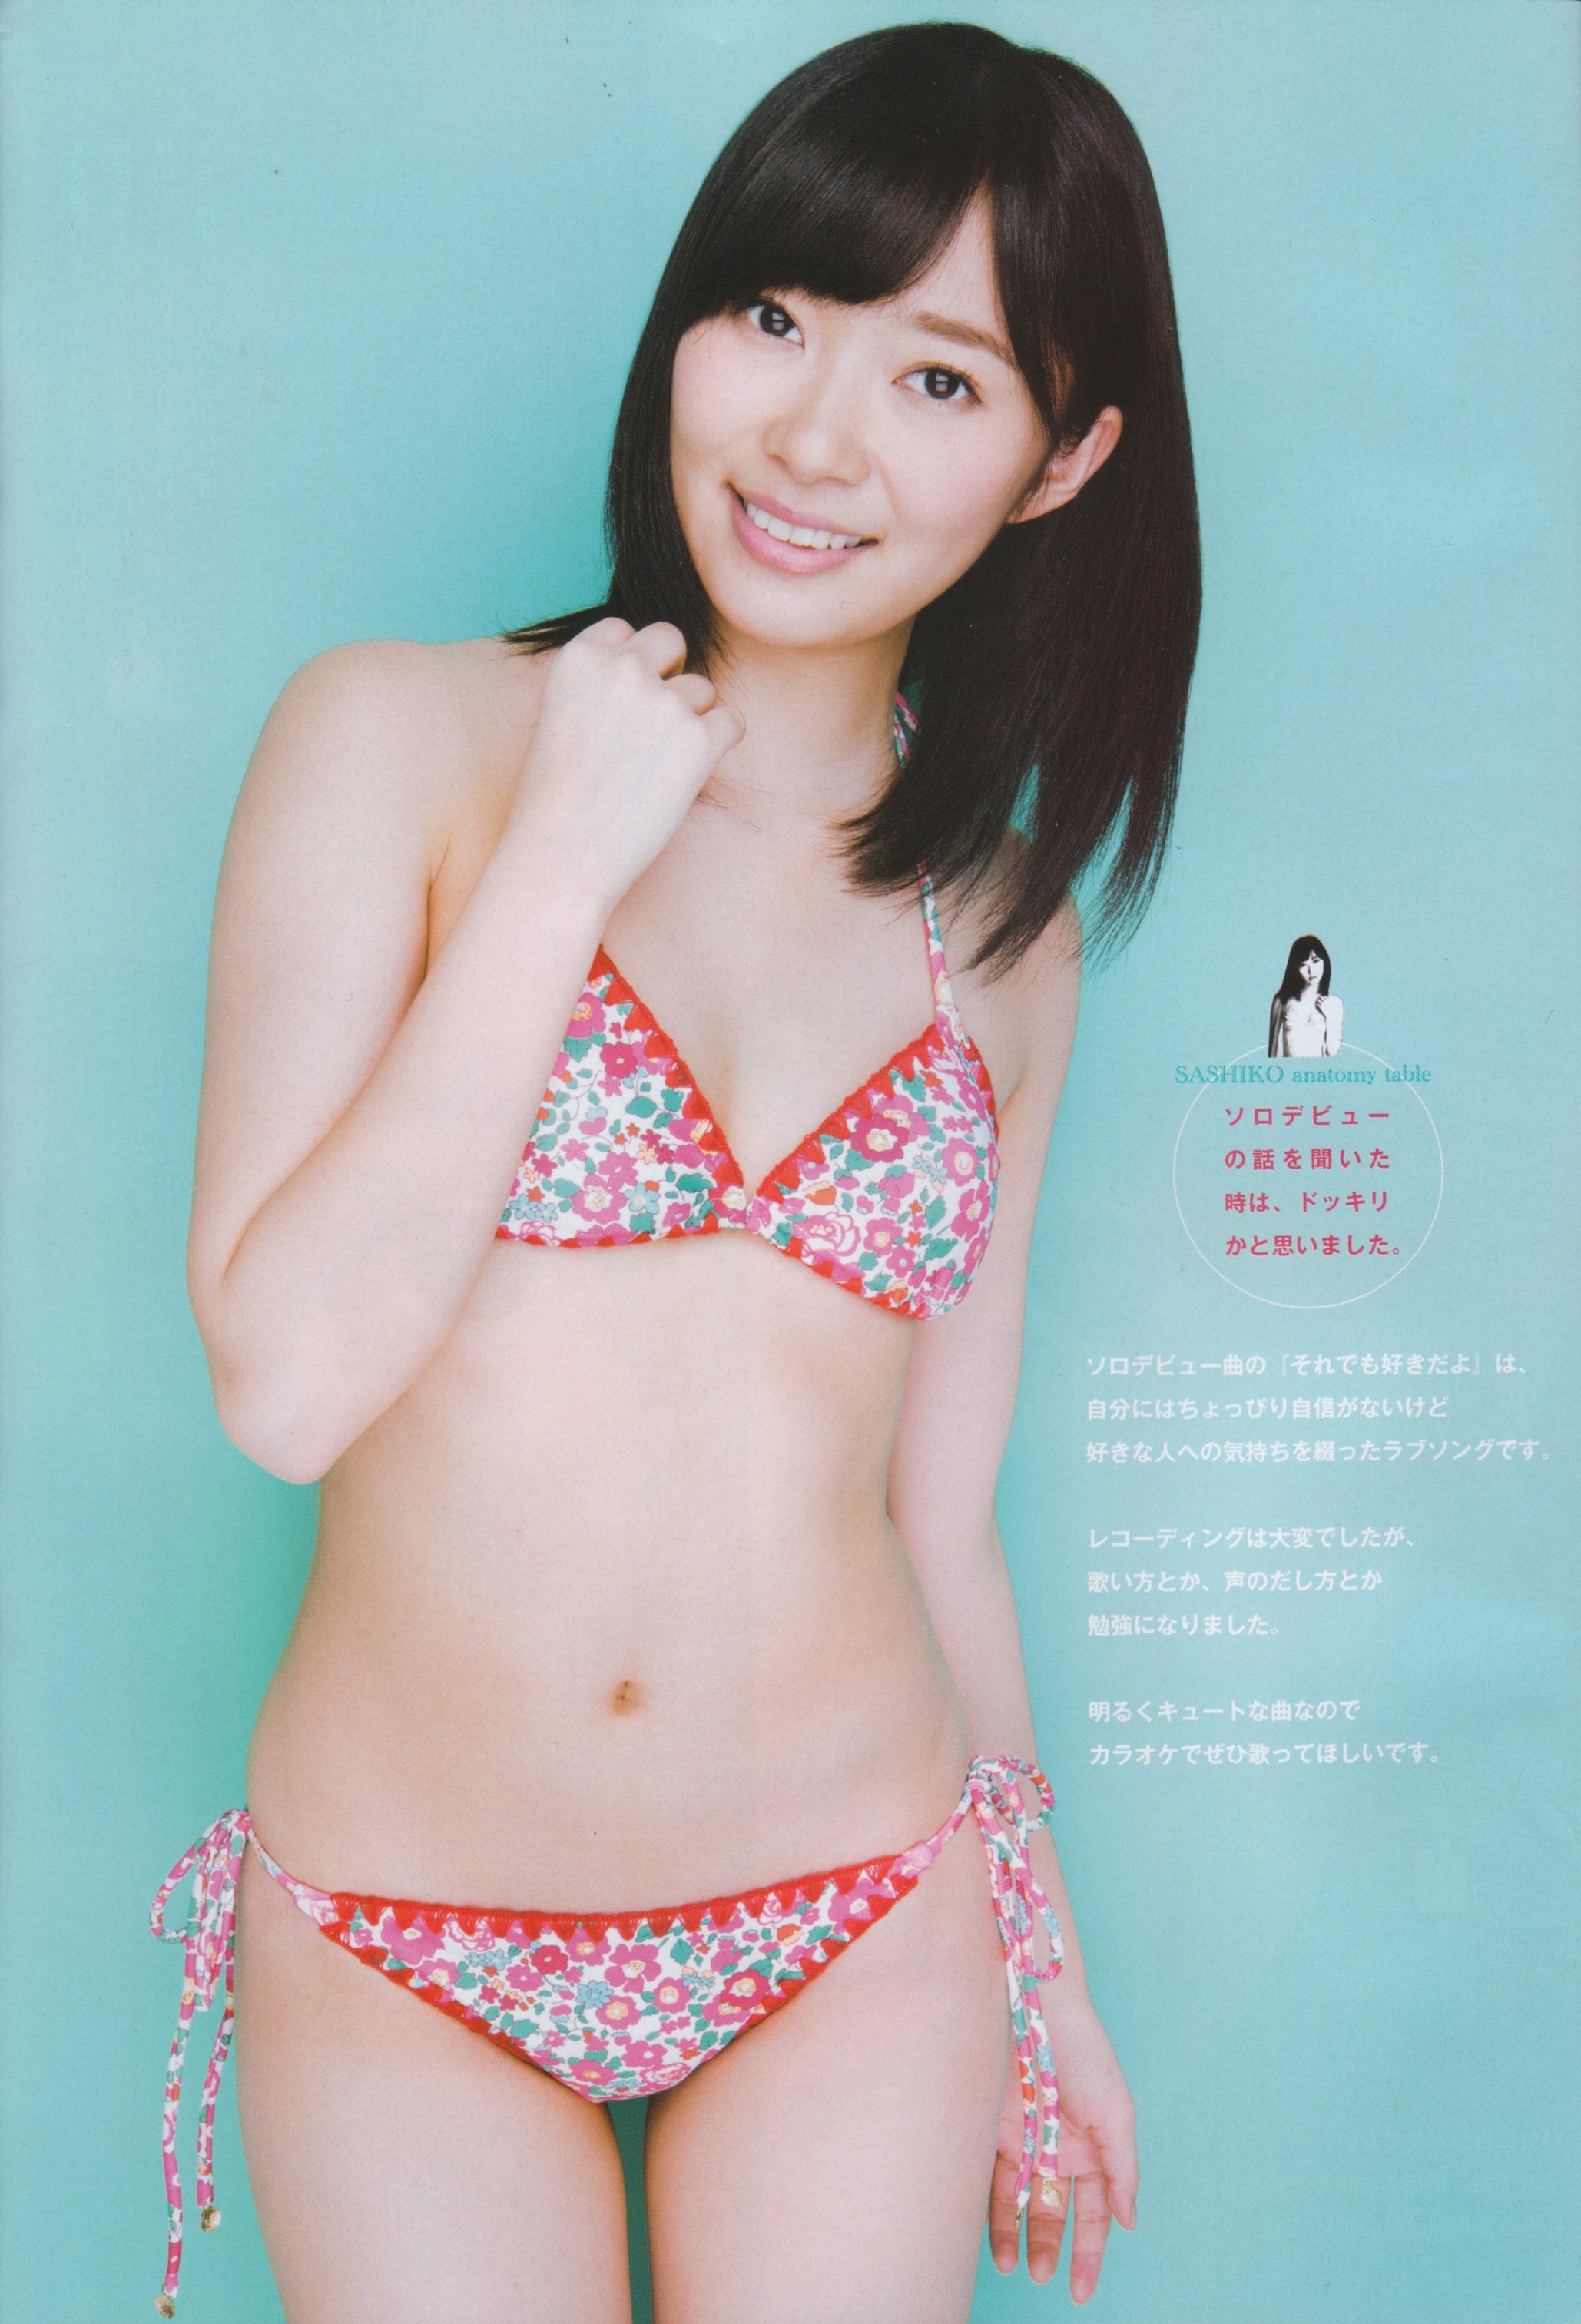 Magazine, Sashihara Rino - Picture Board - Hello!Online